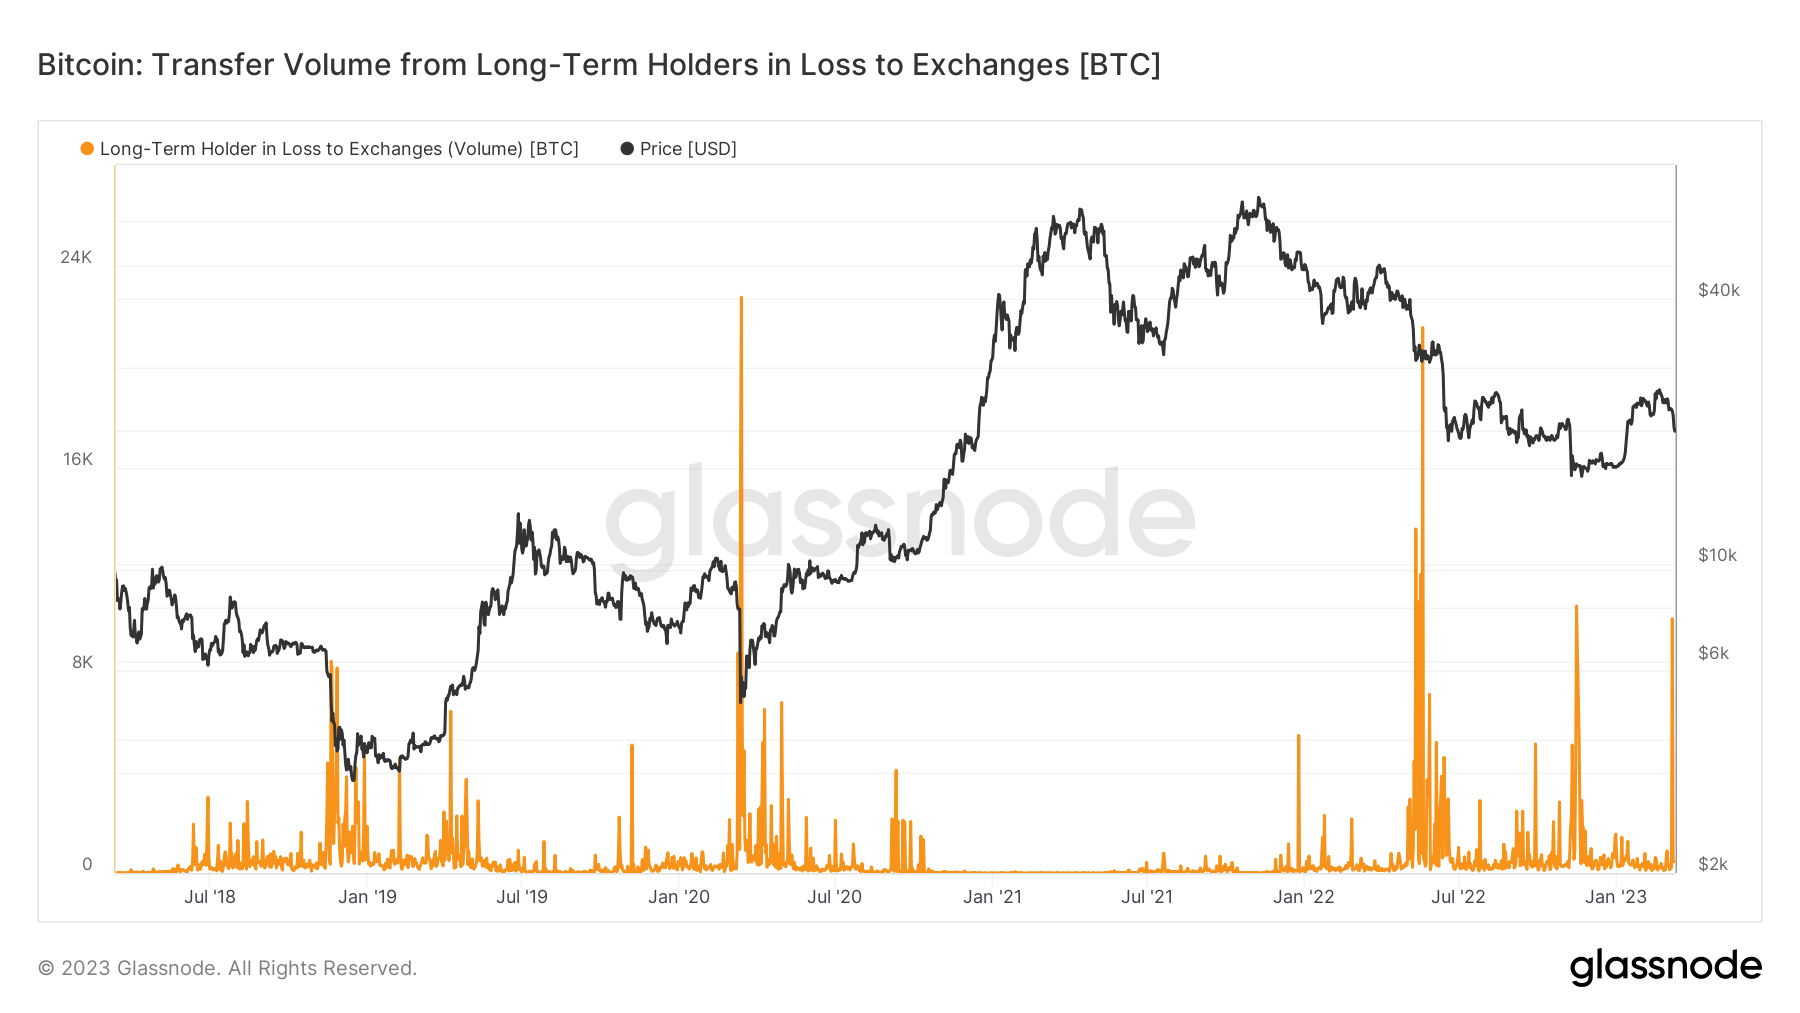 LTH transfer volume to losing exchanges: (Source: Glassnode)